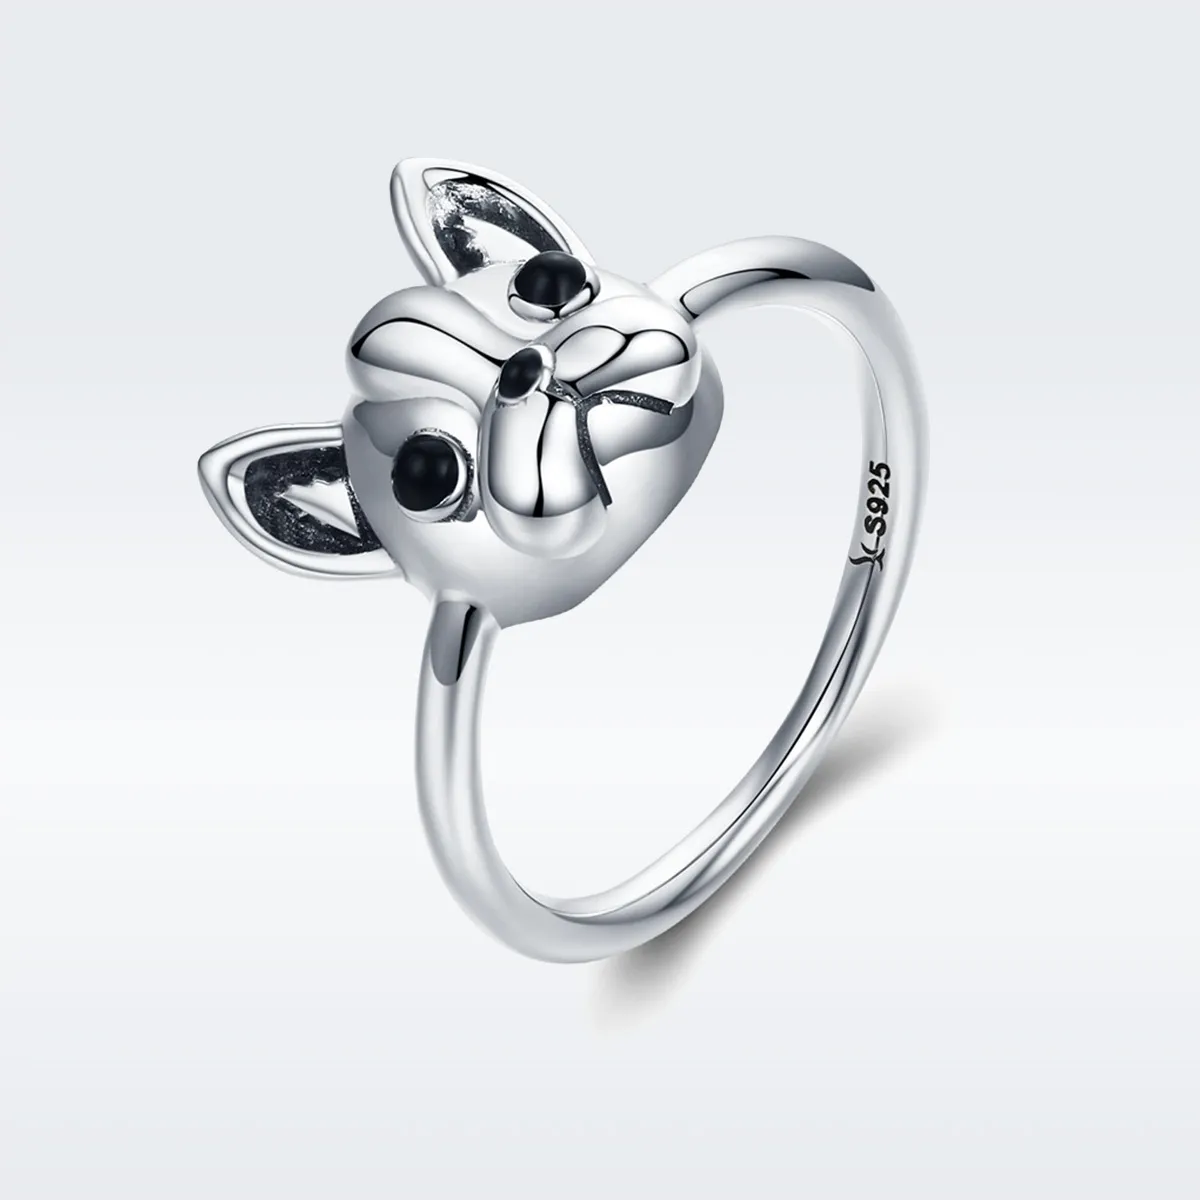 Pandora Style Silver Cute Bulldog Ring - SCR261